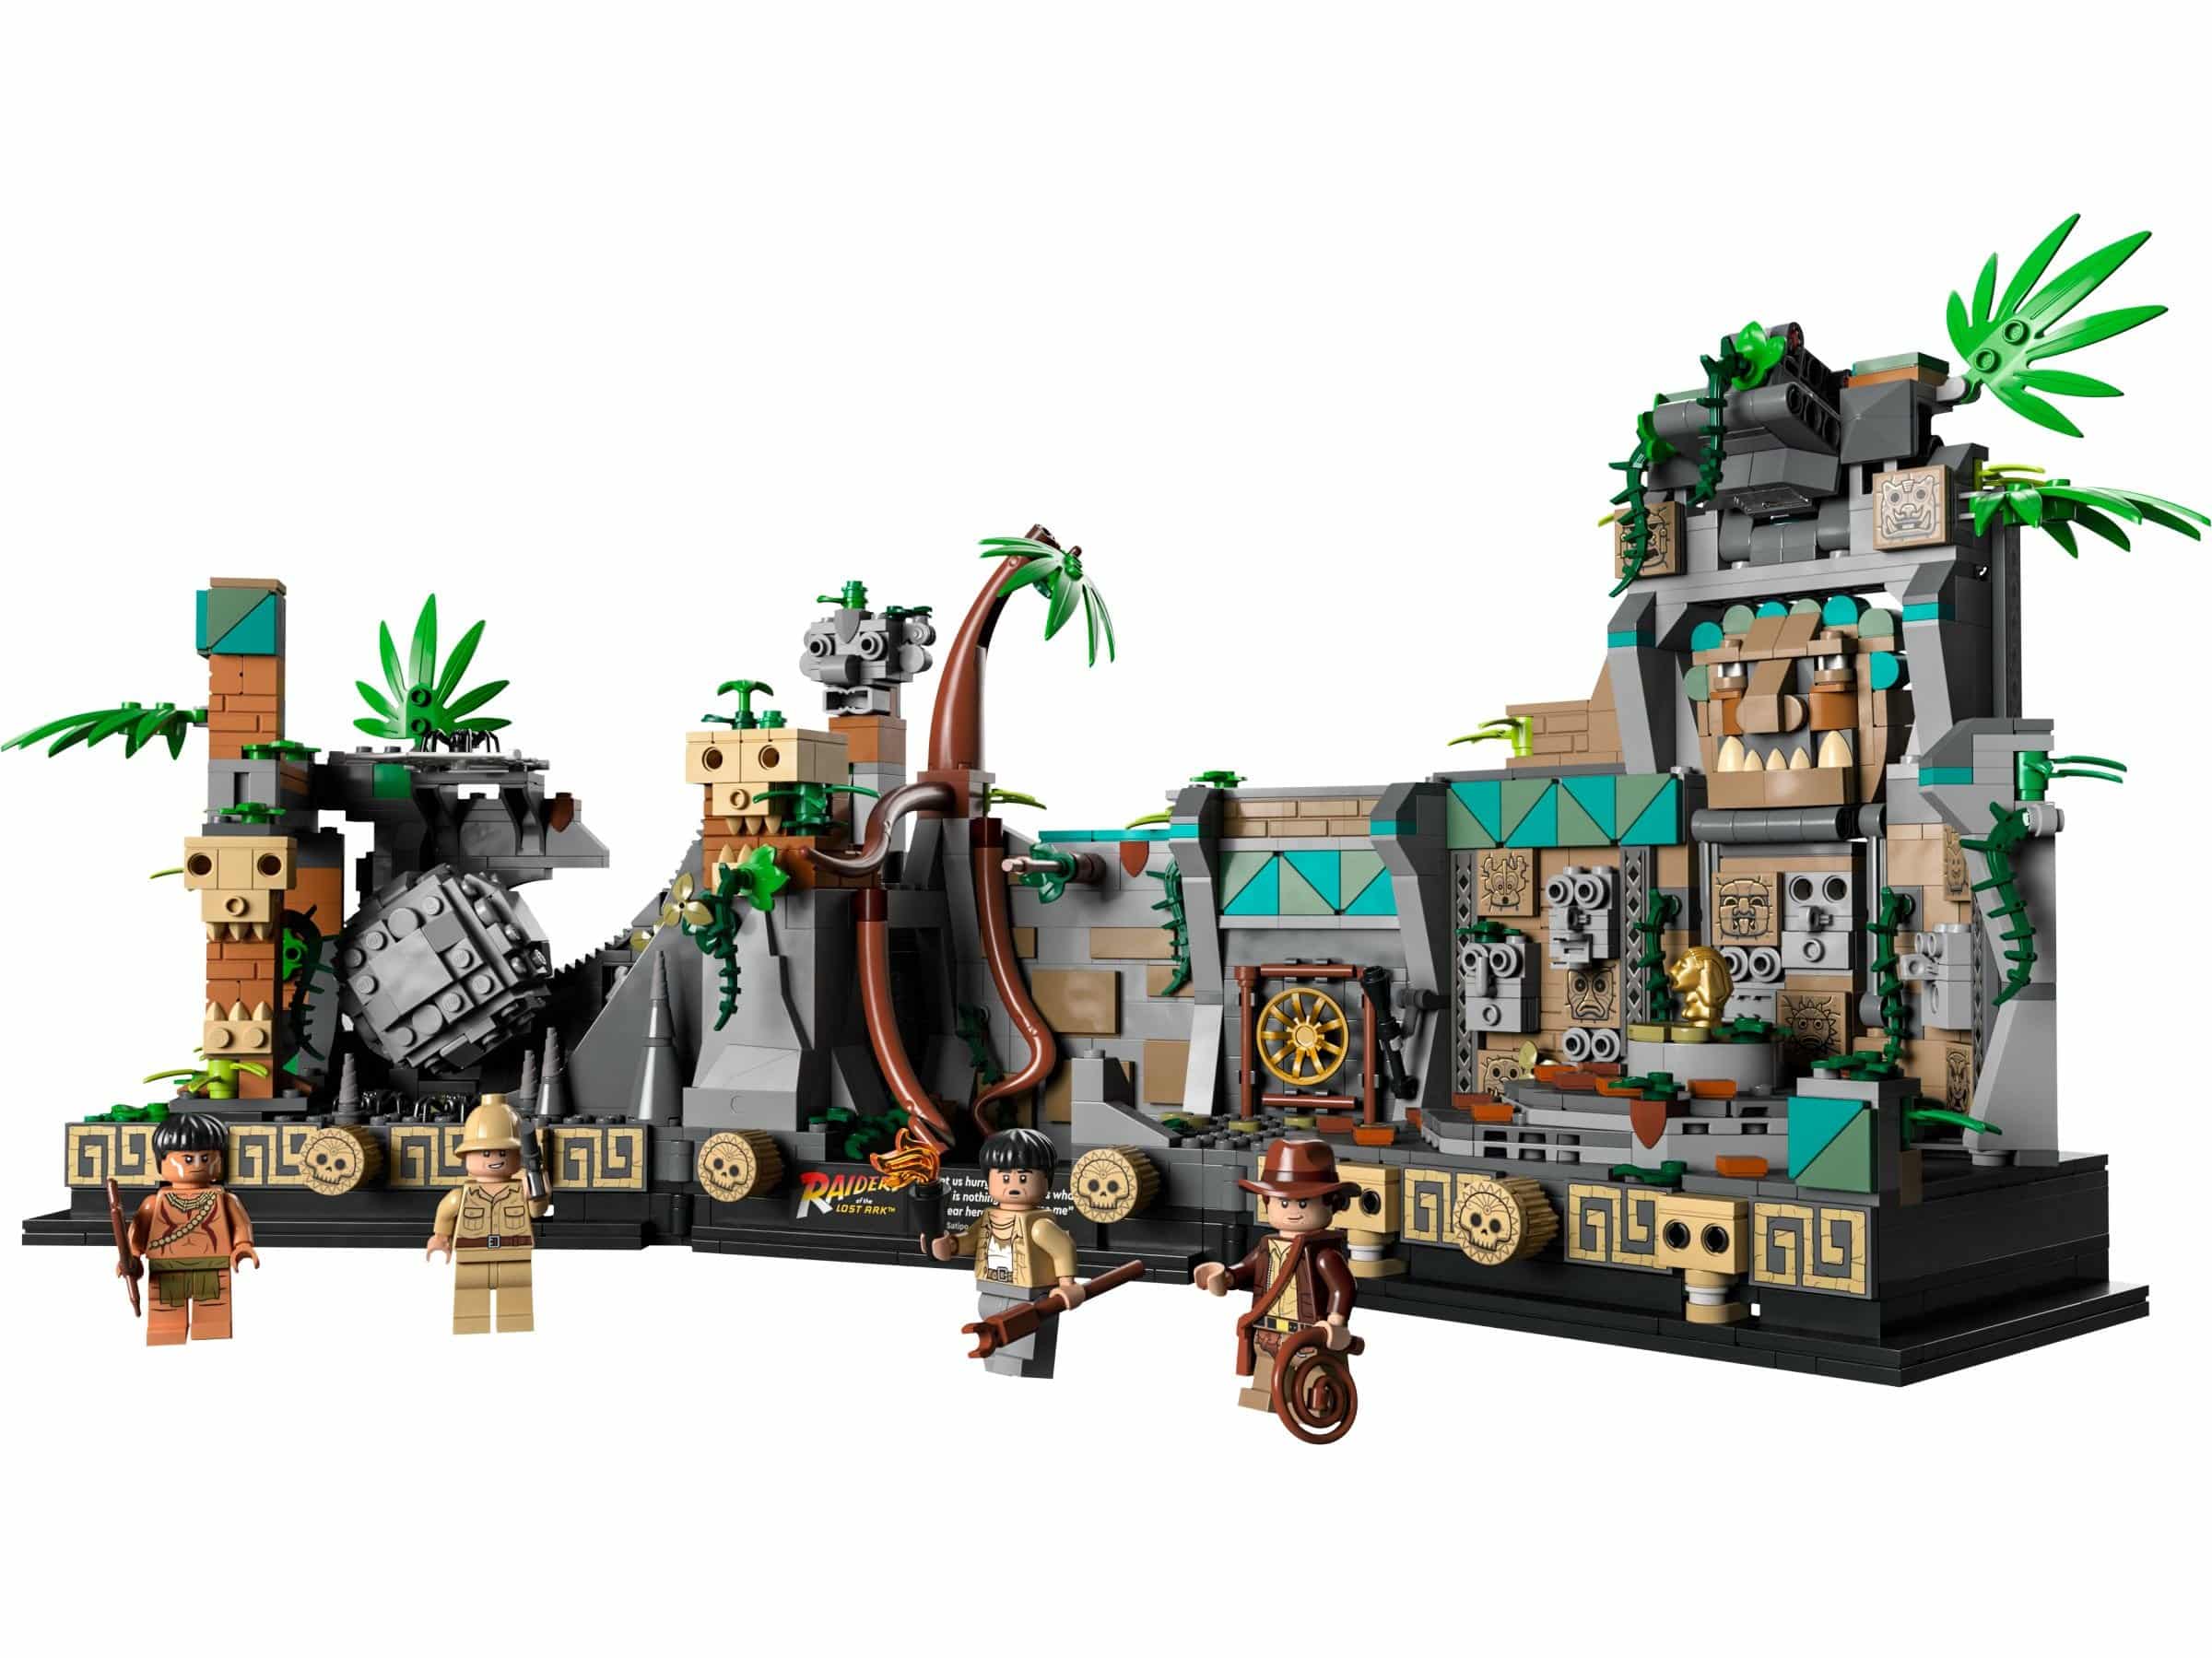 LEGO® Indiana Jones 77015 Tempel des goldenen Götzen